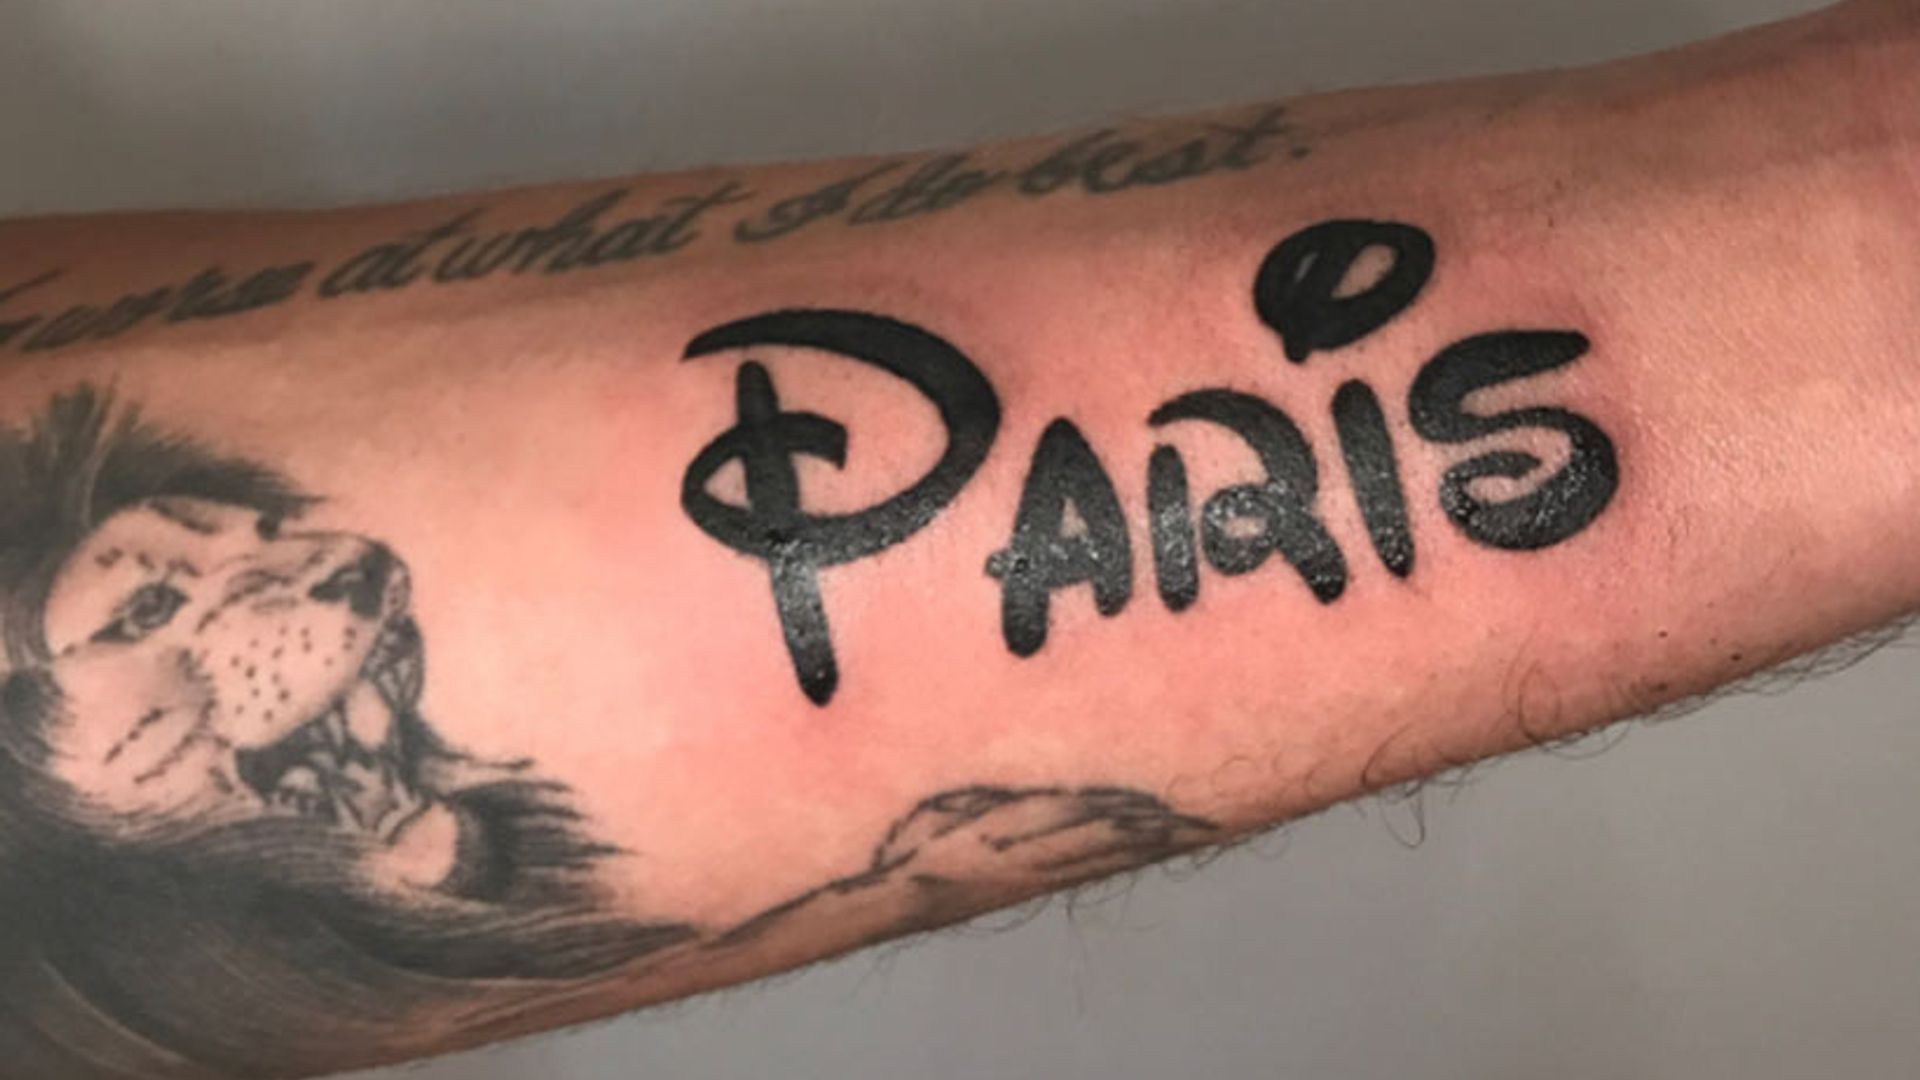 Paris Hilton's boyfriend, Chris Zylka, gets her name tattooed in his arm |  HELLO!